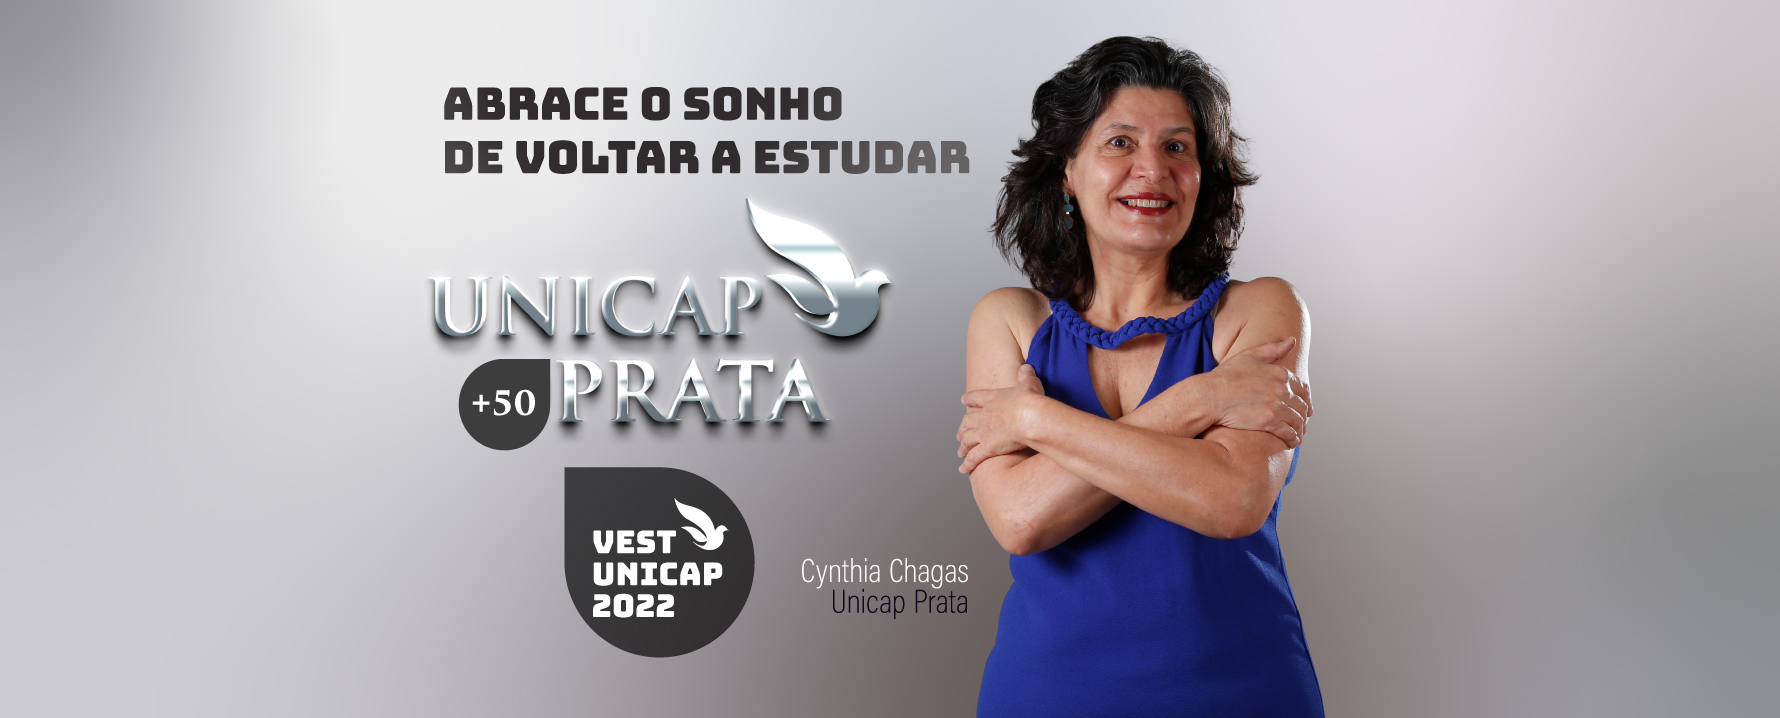 Site do Enade Unicap